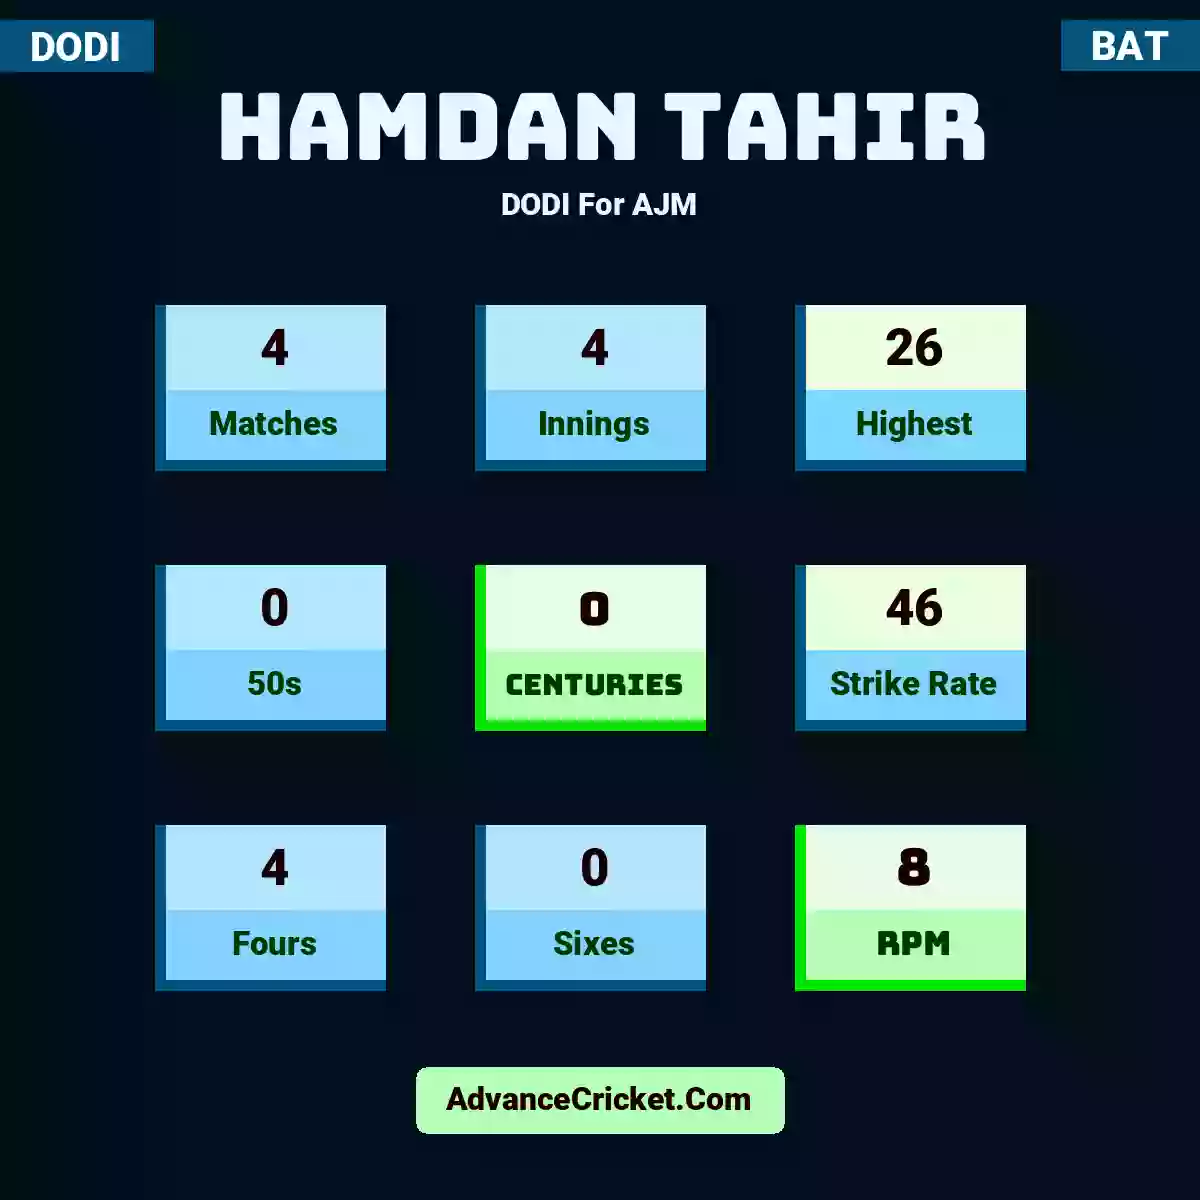 Hamdan Tahir DODI  For AJM, Hamdan Tahir played 4 matches, scored 26 runs as highest, 0 half-centuries, and 0 centuries, with a strike rate of 46. H.Tahir hit 4 fours and 0 sixes, with an RPM of 8.